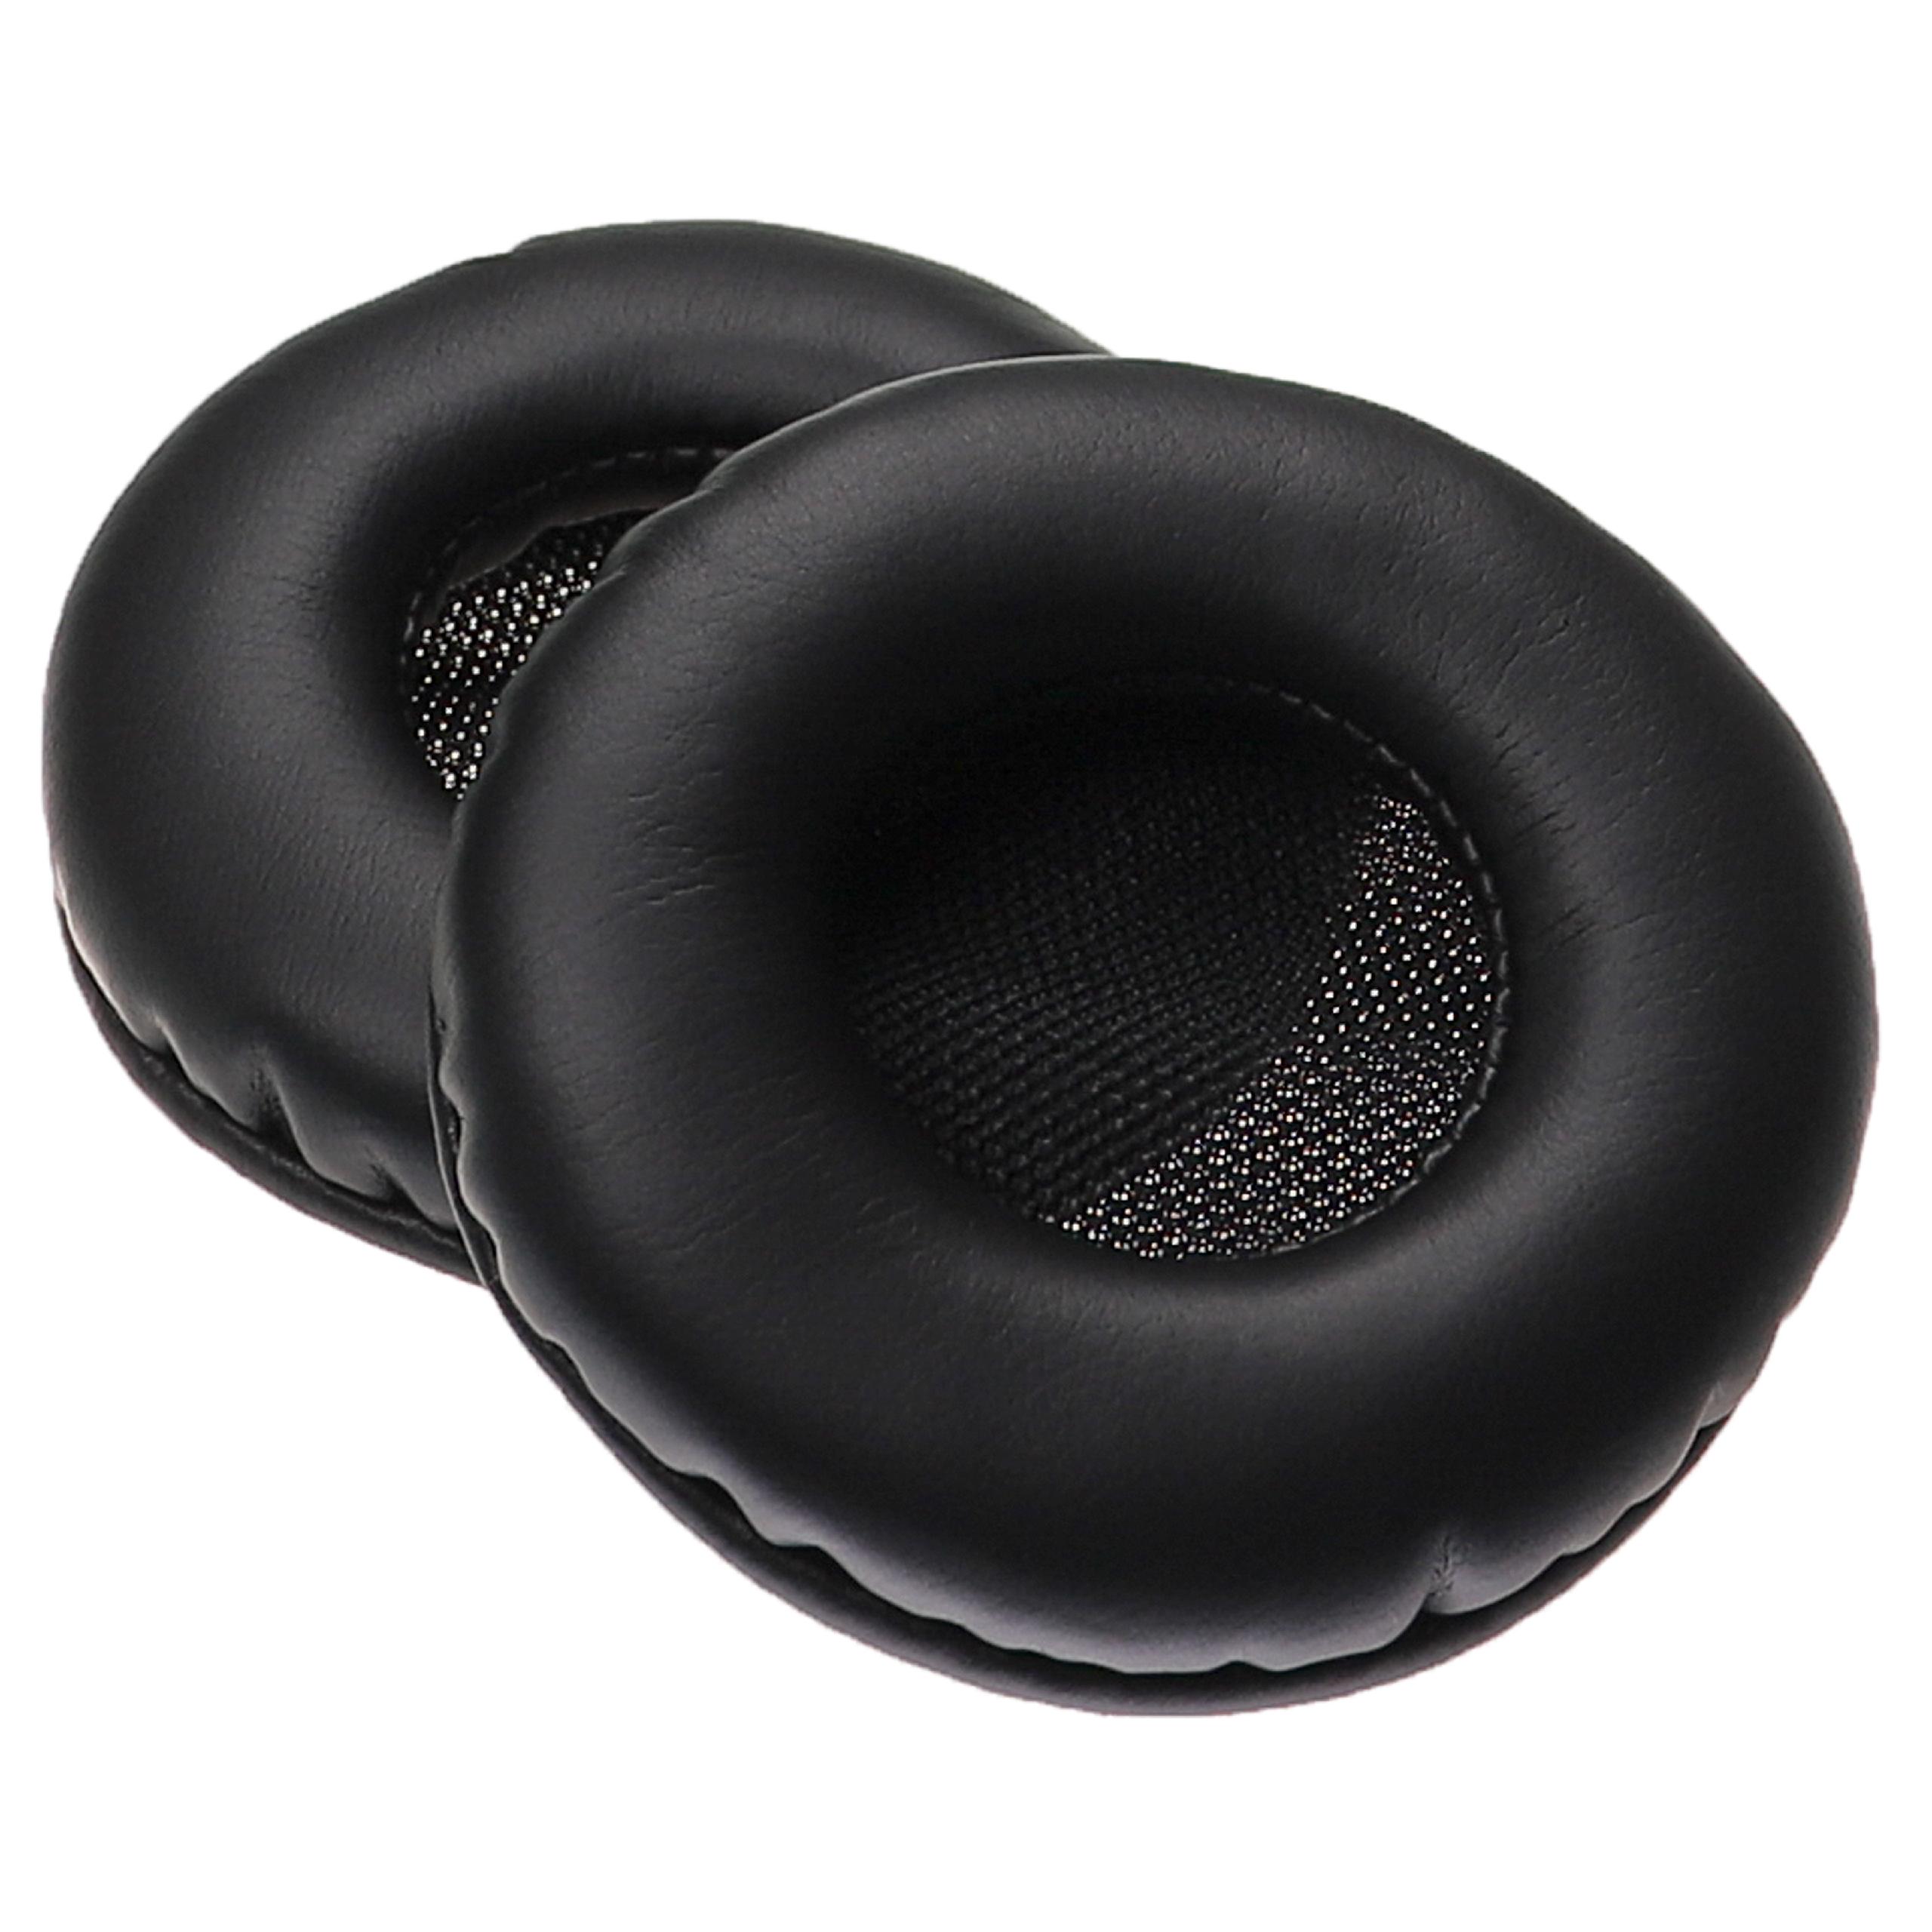 Ohrenpolster passend für Sony MDR-V100 Kopfhörer u.a. - Silikon, 7,2 x 7 cm, 36 mm stark, Schwarz